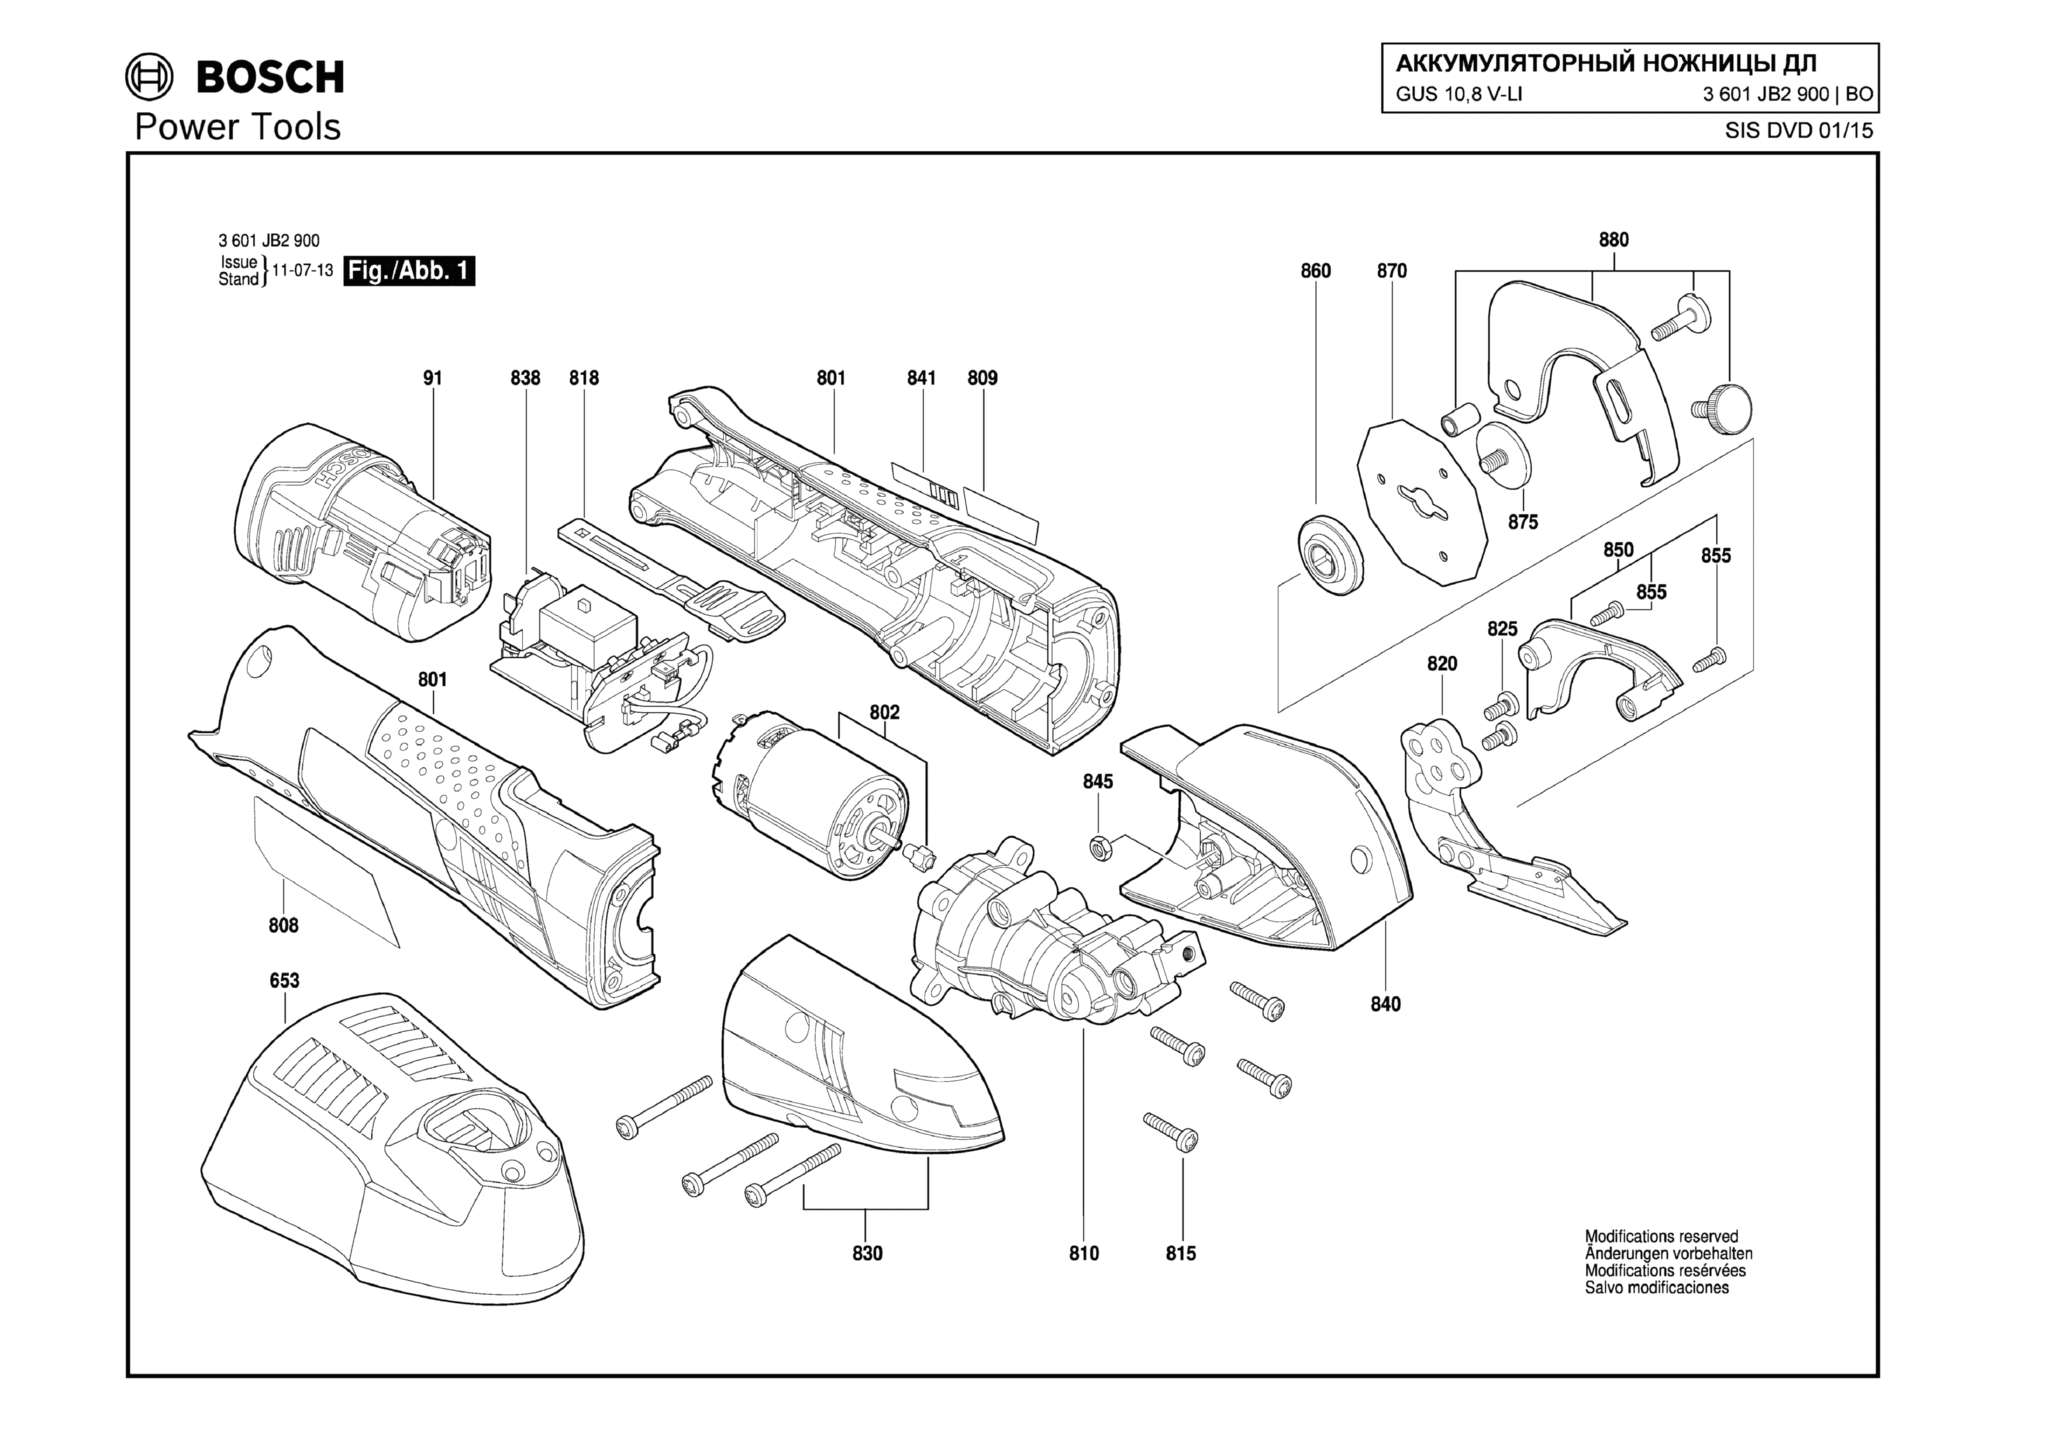 Запчасти, схема и деталировка Bosch GUS 10,8 V-LI (ТИП 3601JB2900)